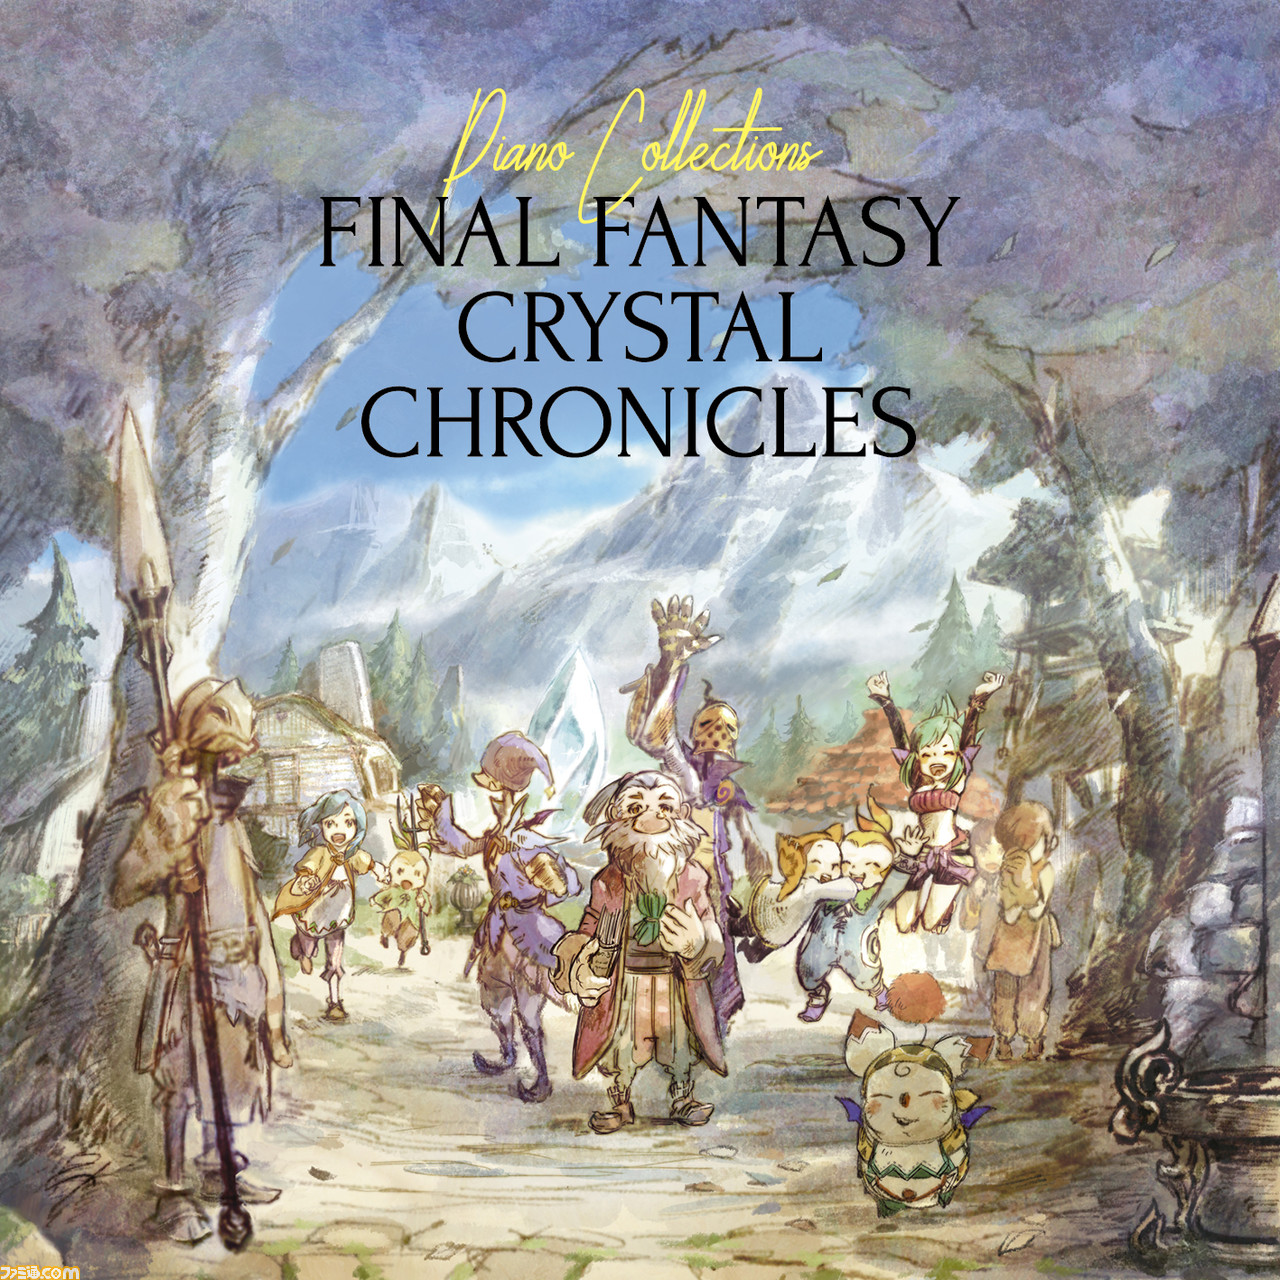 Ffcc ピアノアレンジアルバム Piano Collections Final Fantasy Crystal Chronicles 収録曲全10曲が公開 ゲーム エンタメ最新情報のファミ通 Com